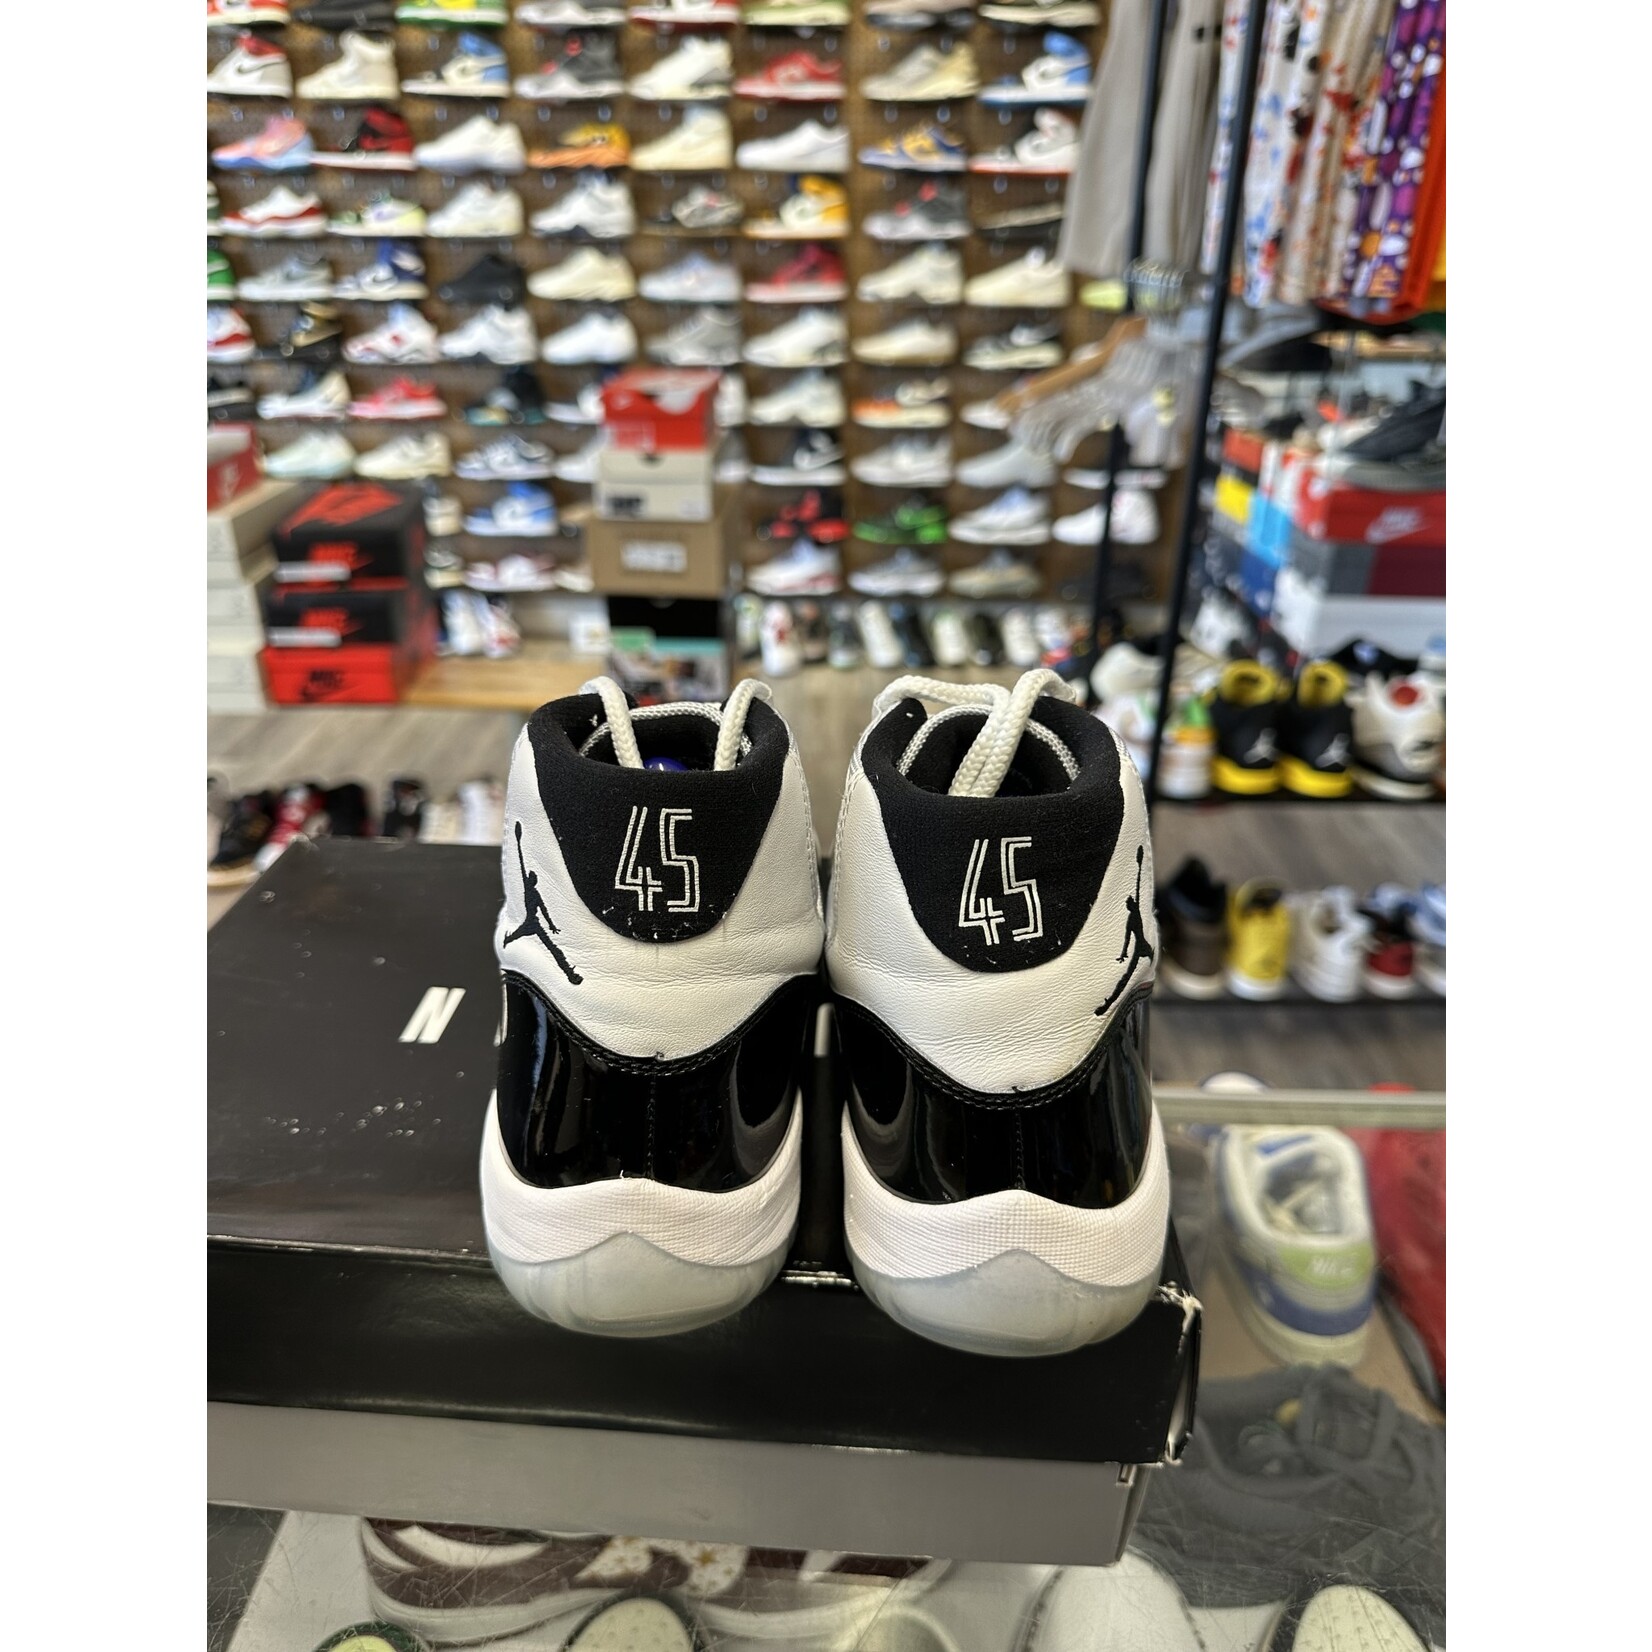 Jordan Jordan 11 Retro Concord (2018) Size 9, PREOWNED